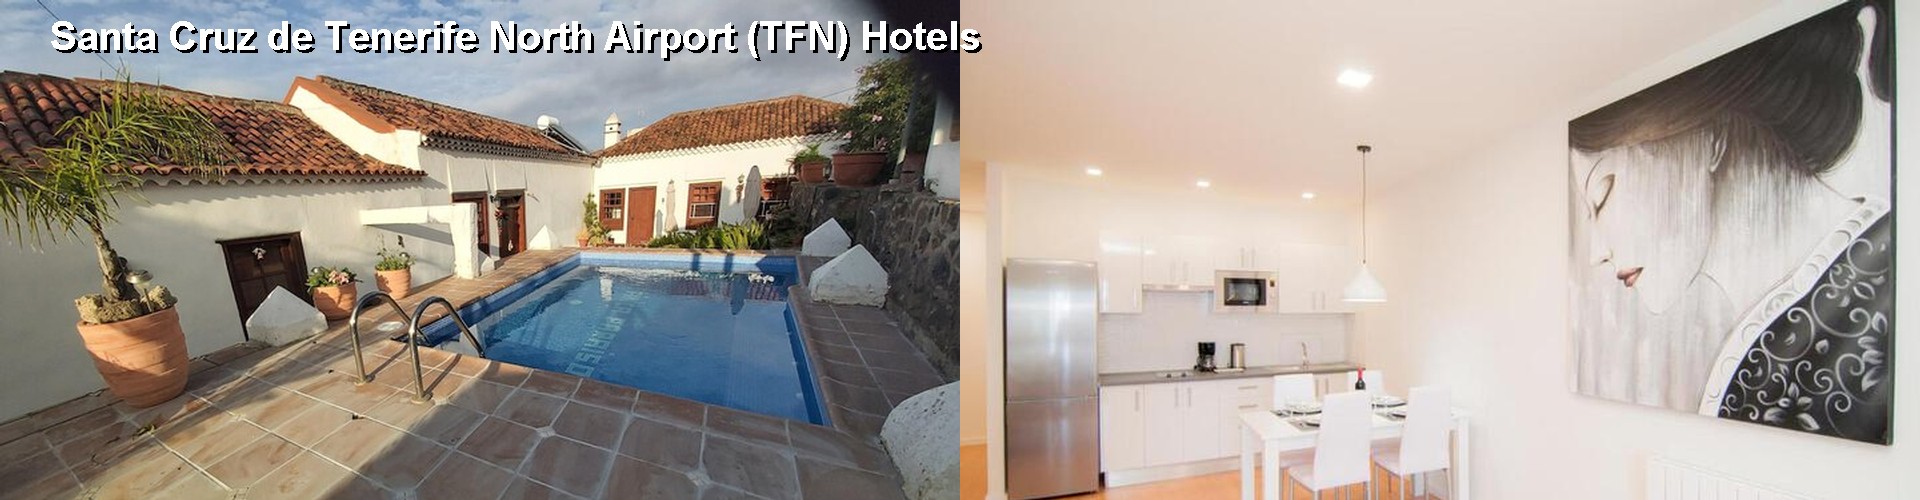 5 Best Hotels near Santa Cruz de Tenerife North Airport (TFN)